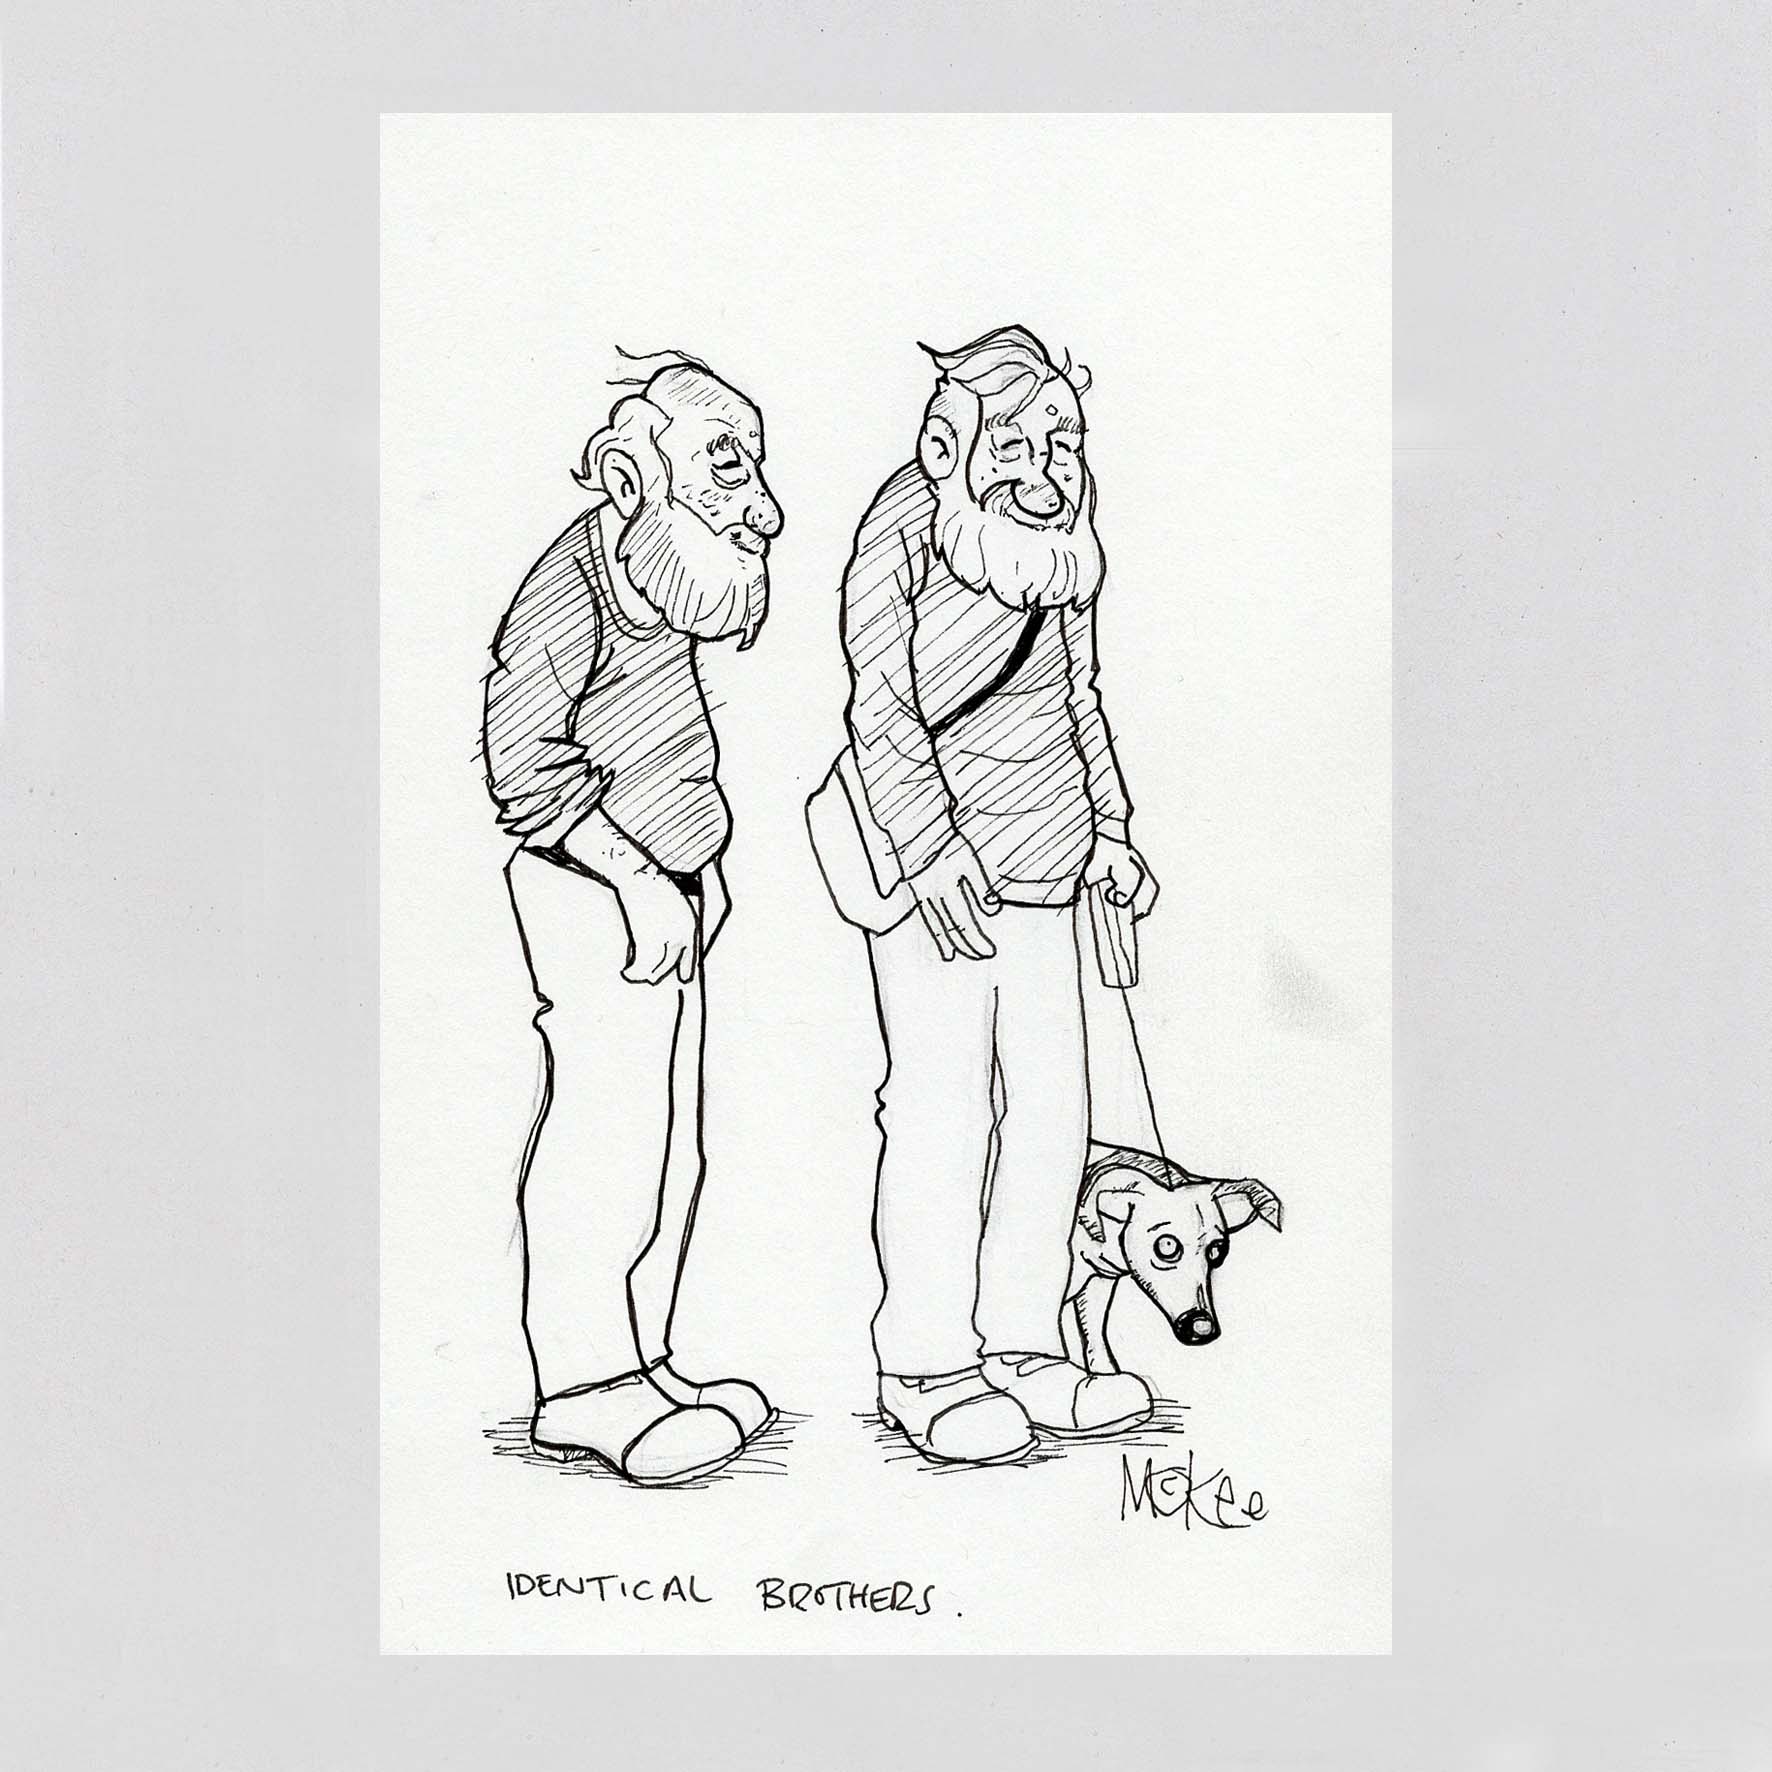 Identical Brothers - Original Sketch